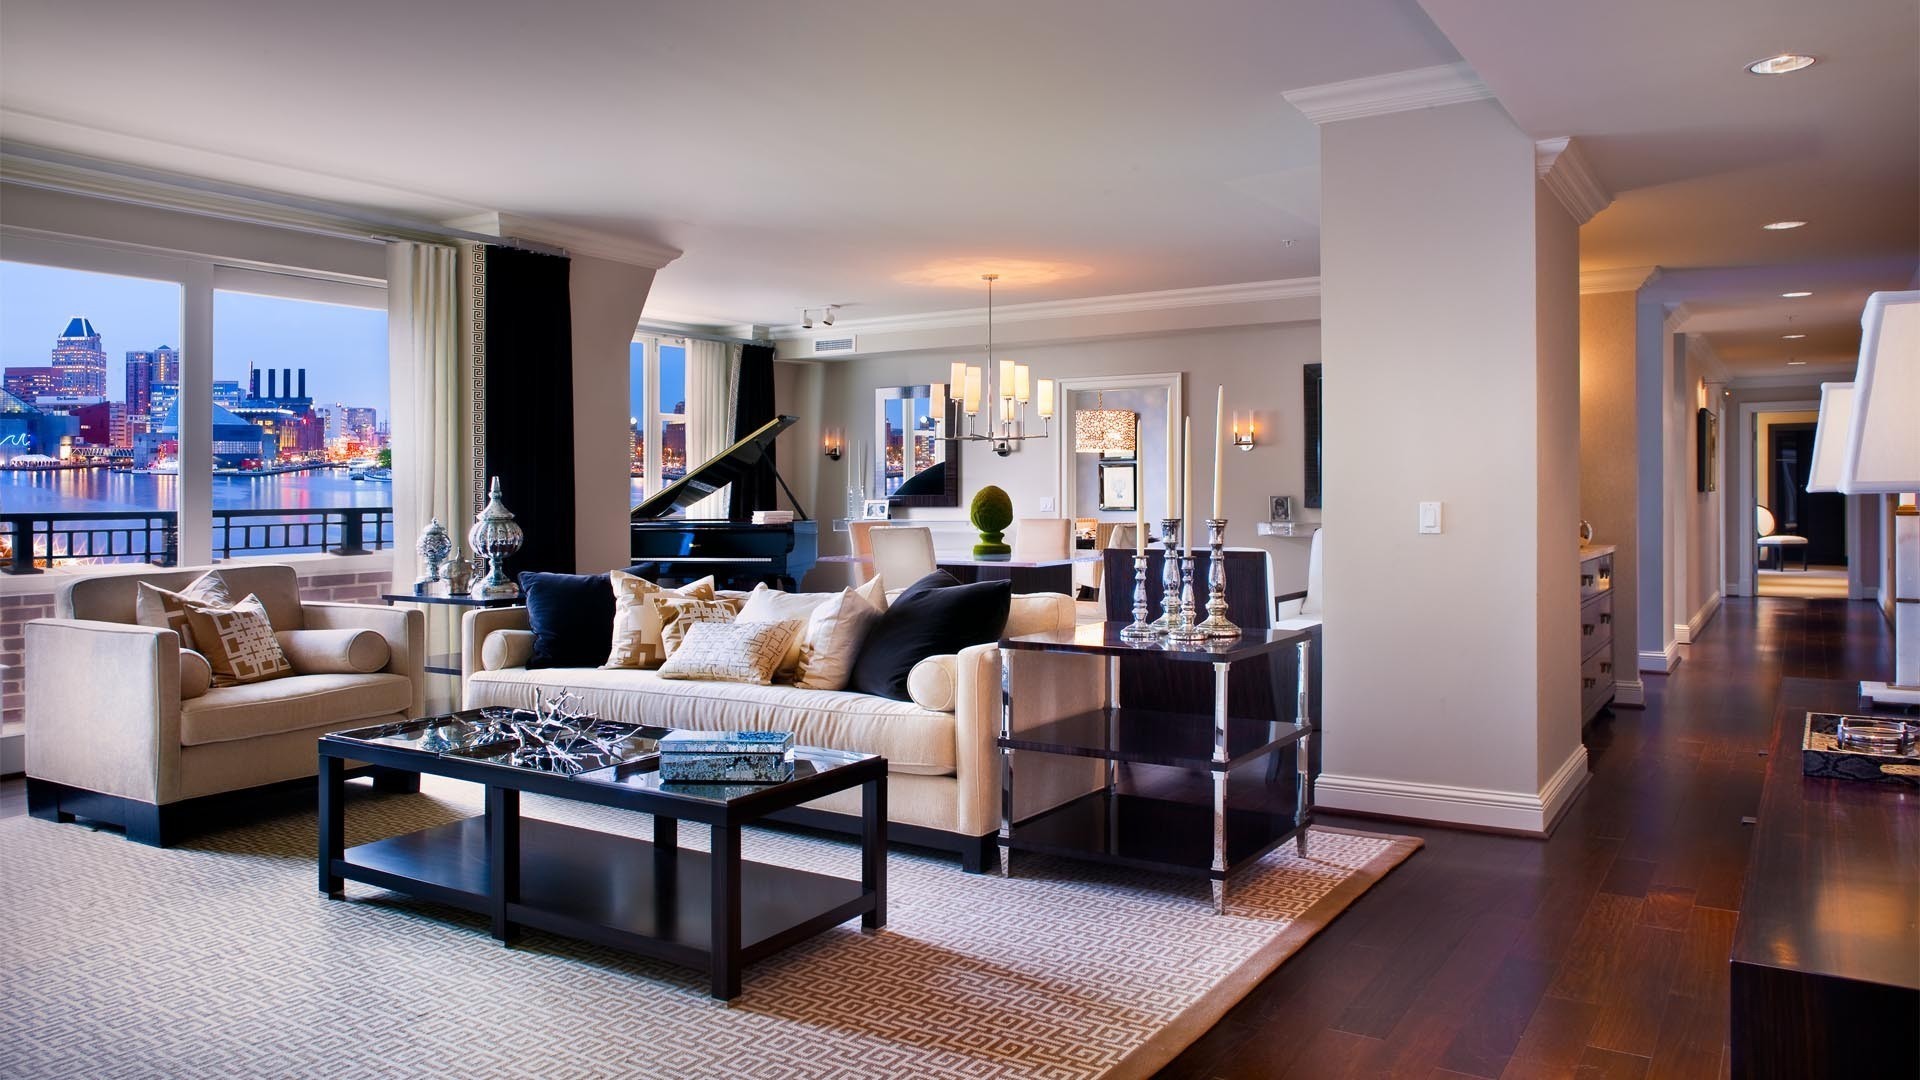 General 1920x1080 room luxury indoors interior piano musical instrument